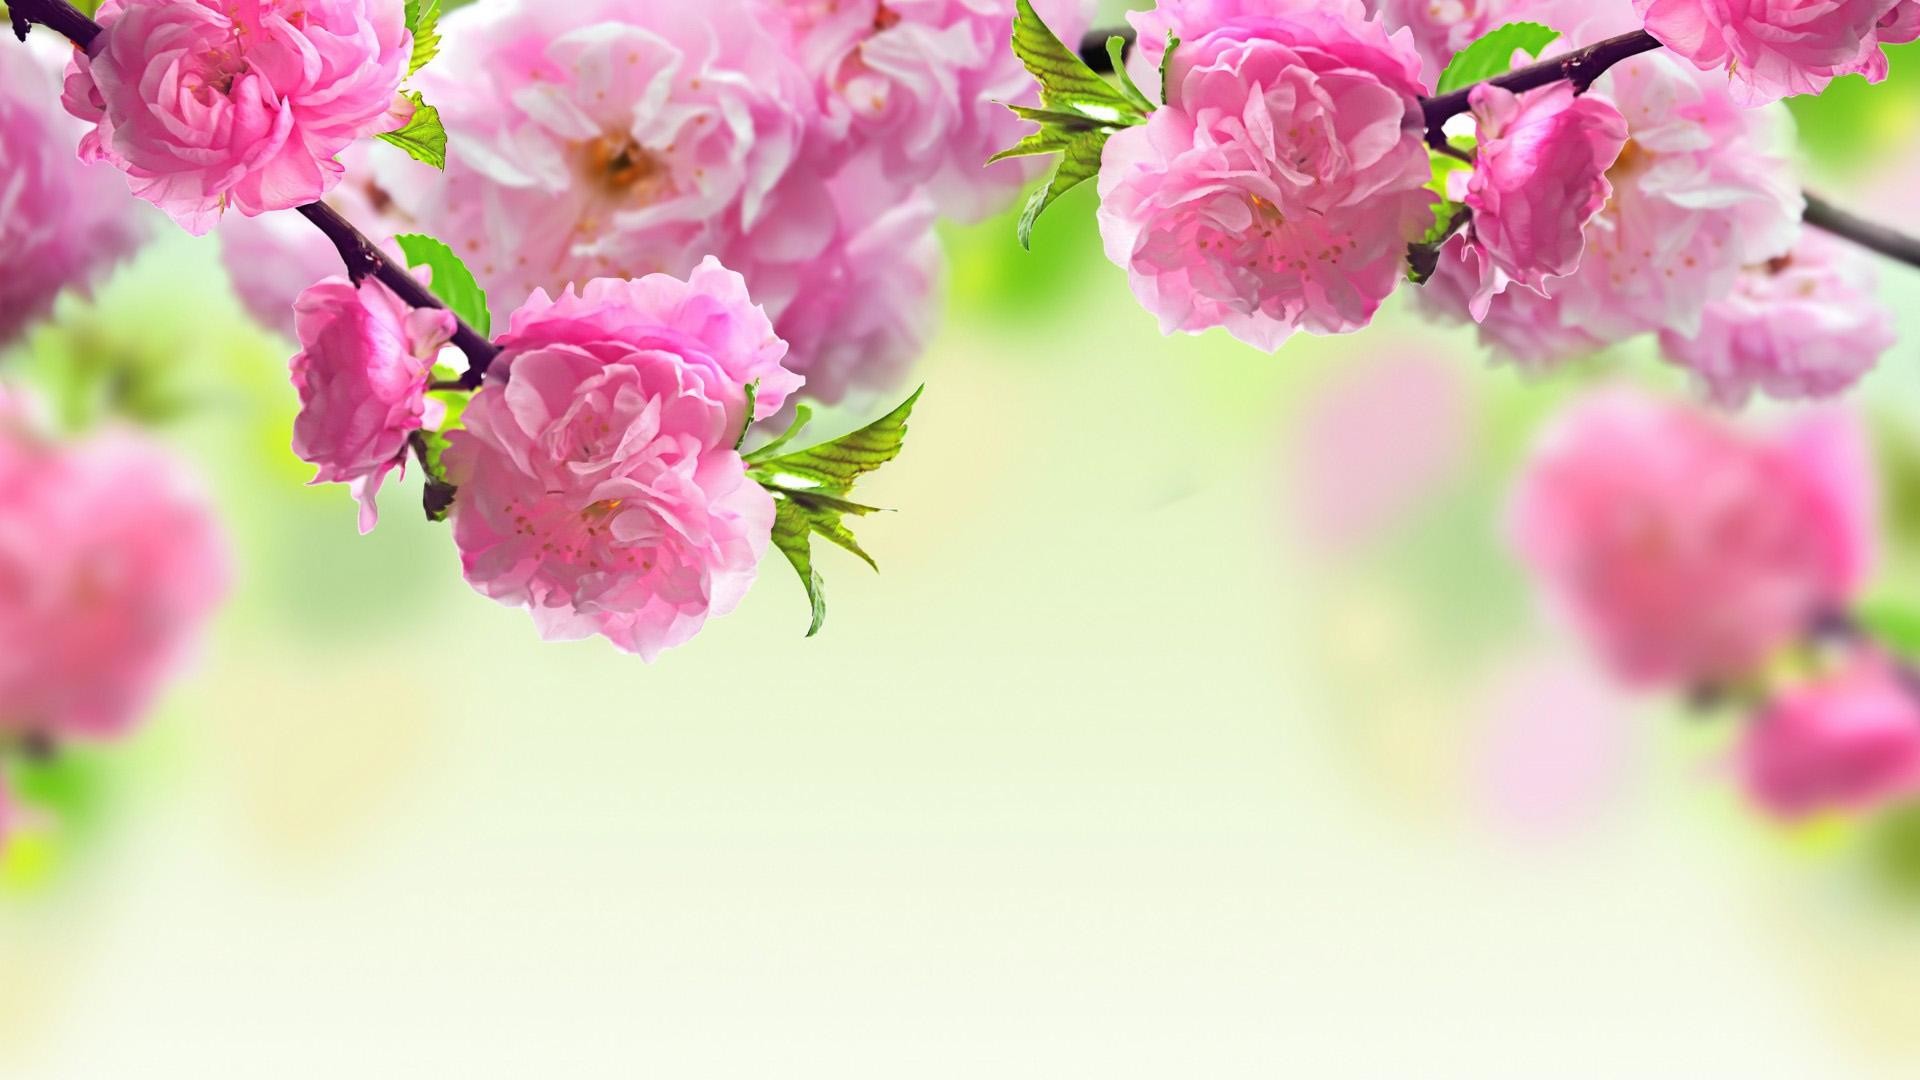 Spring Flowers Background Desktop (66+ pictures)